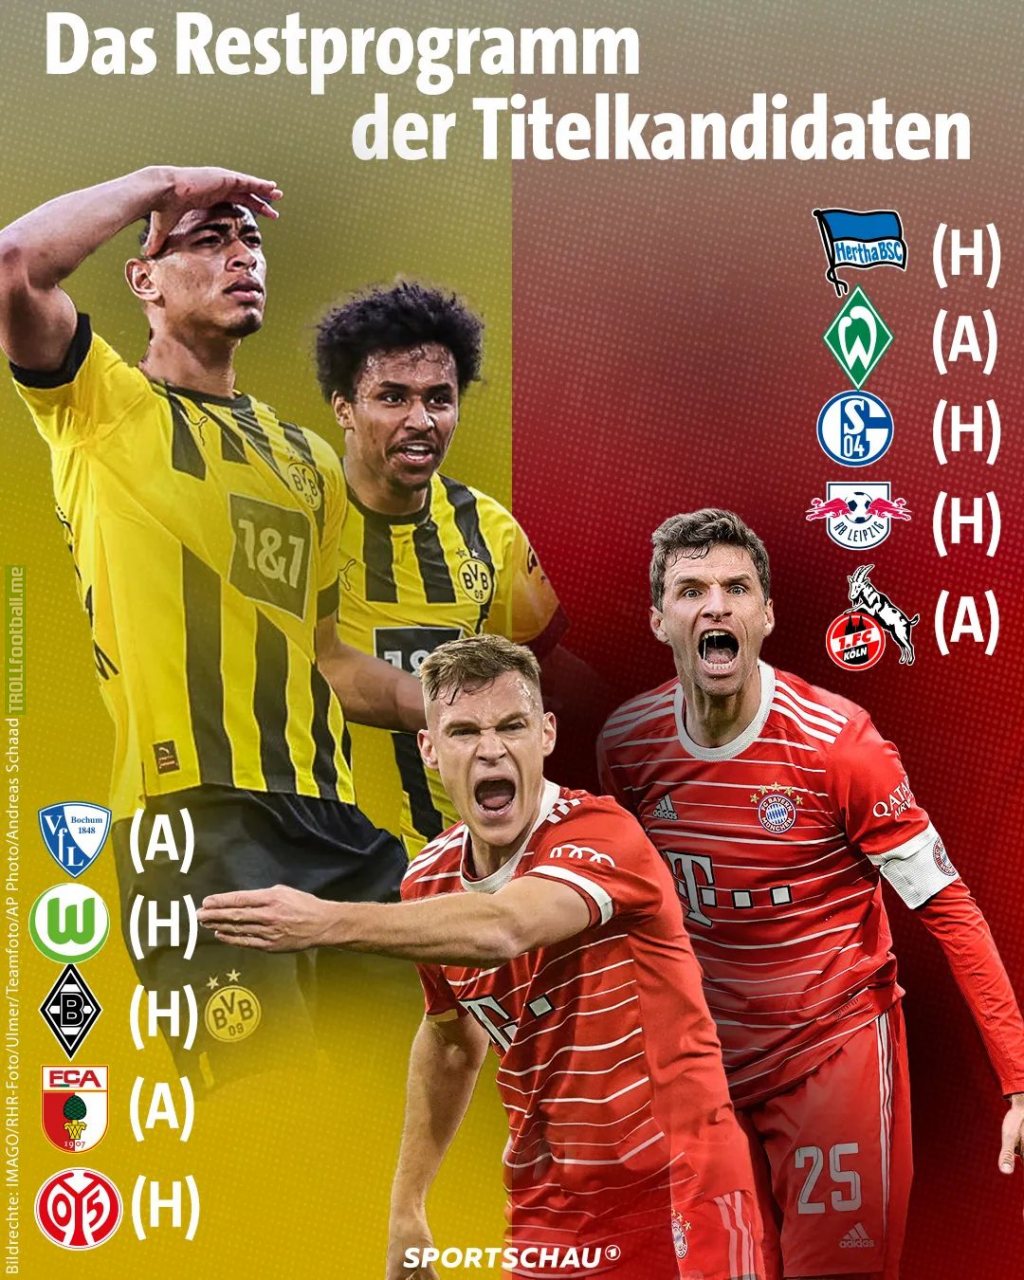 [Sportschau] Remaining fixtures of Bundesliga leaders Borussia Dortmund and Bayern München